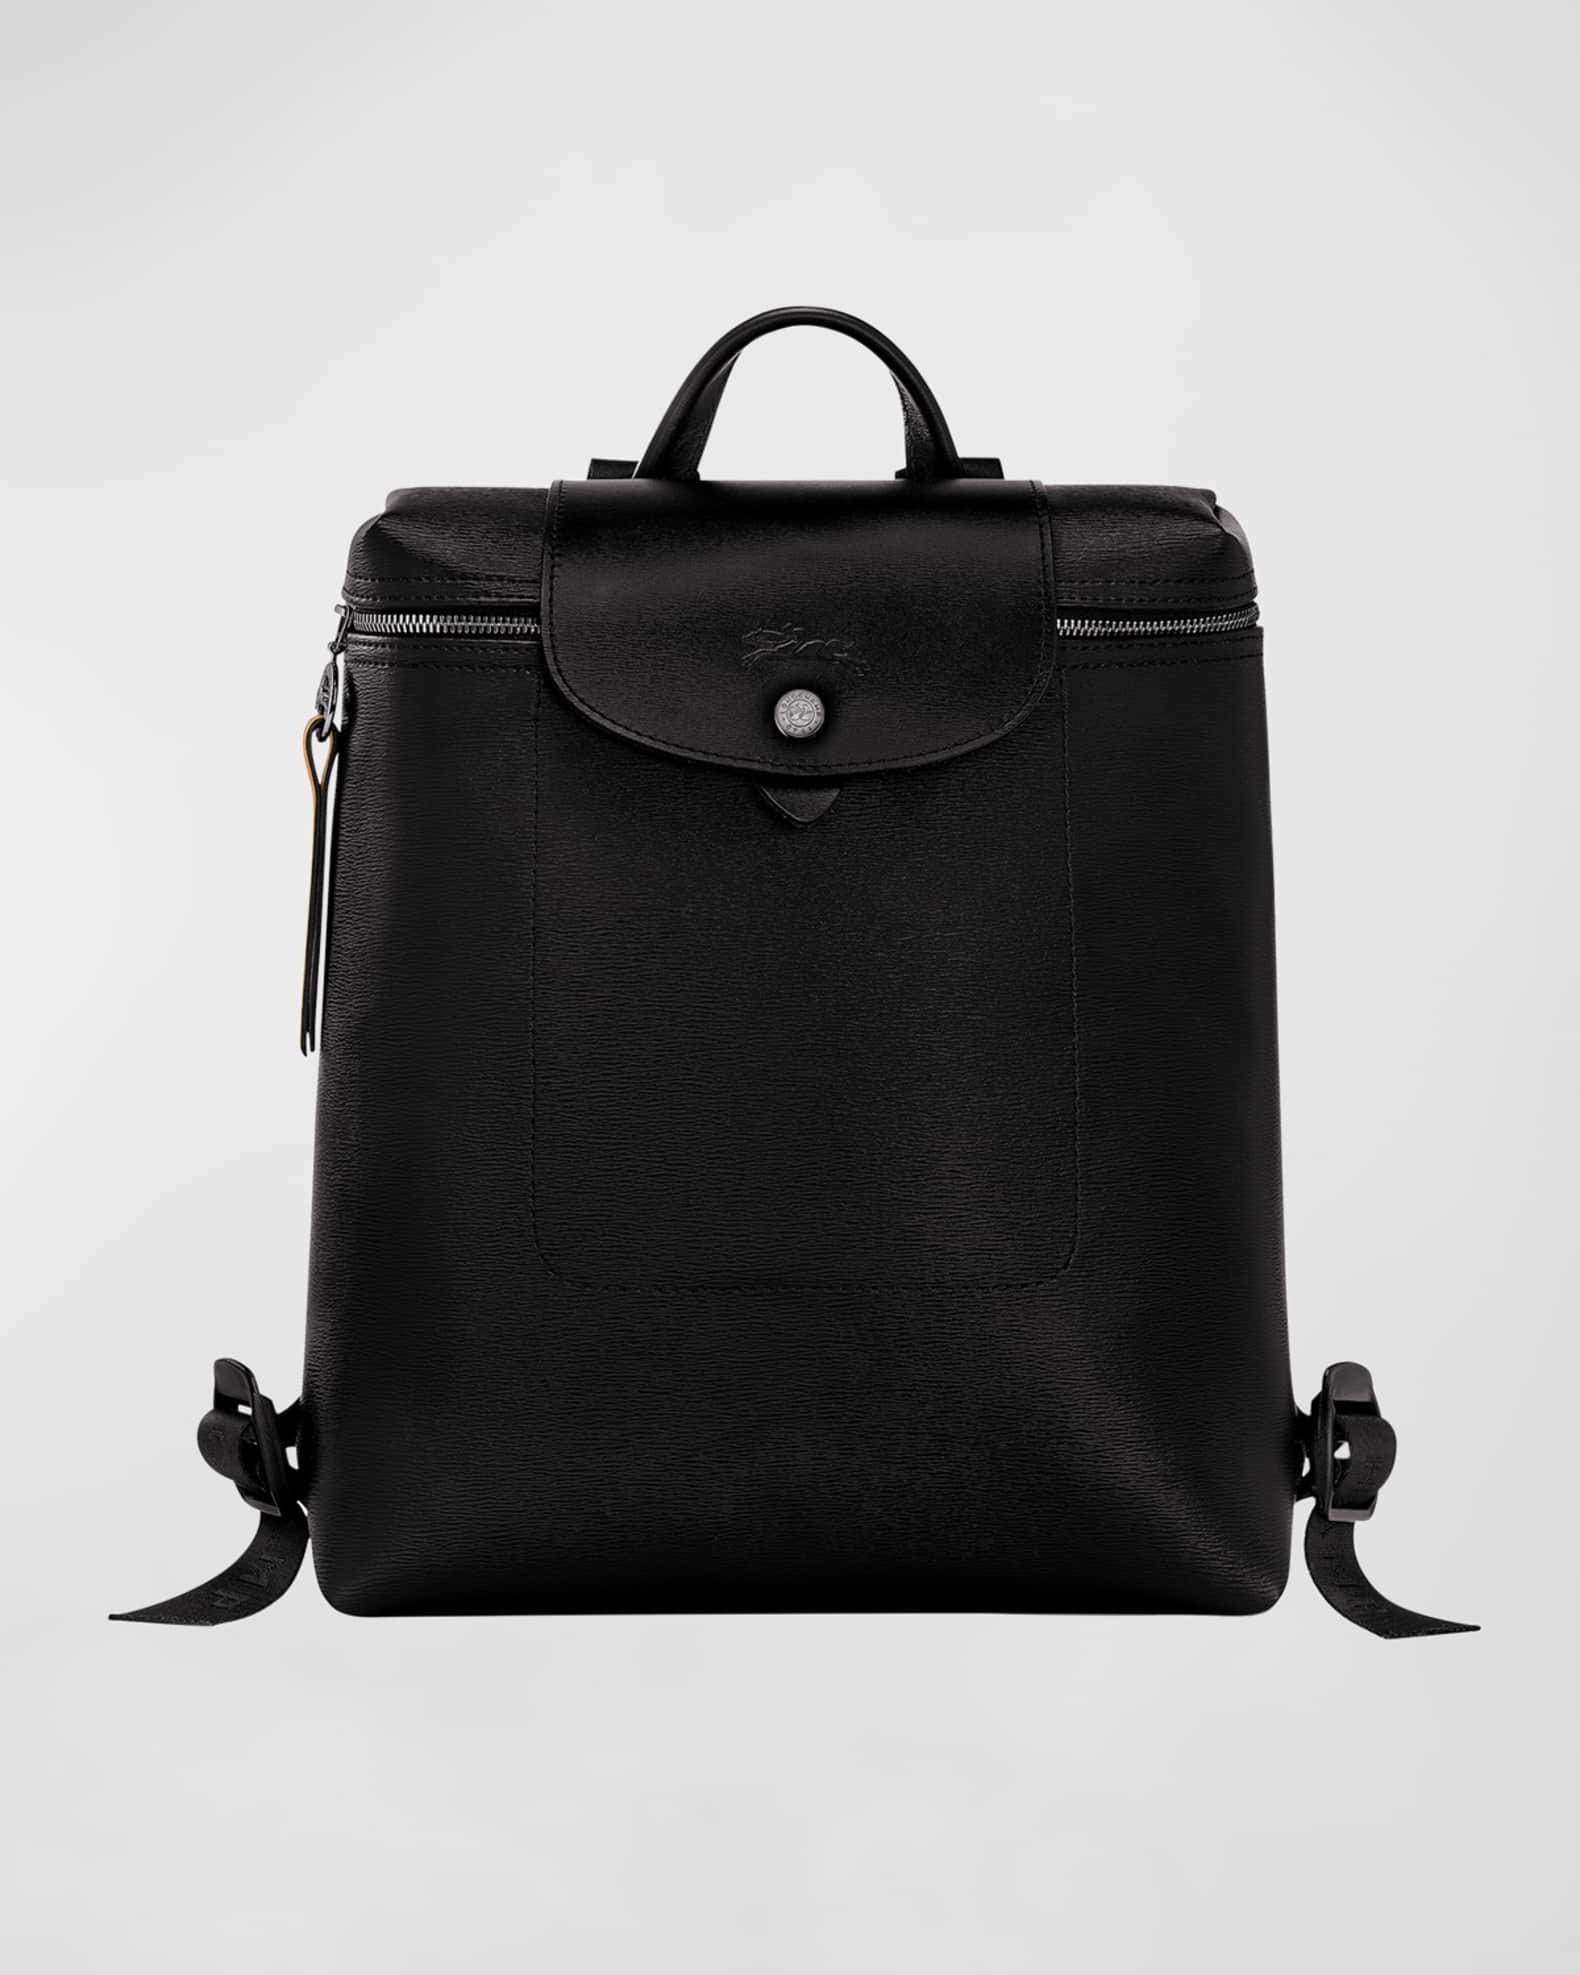 Longchamp Le Pliage Side Pocket Hobo Crossbody Bag ~NEW~ Grey